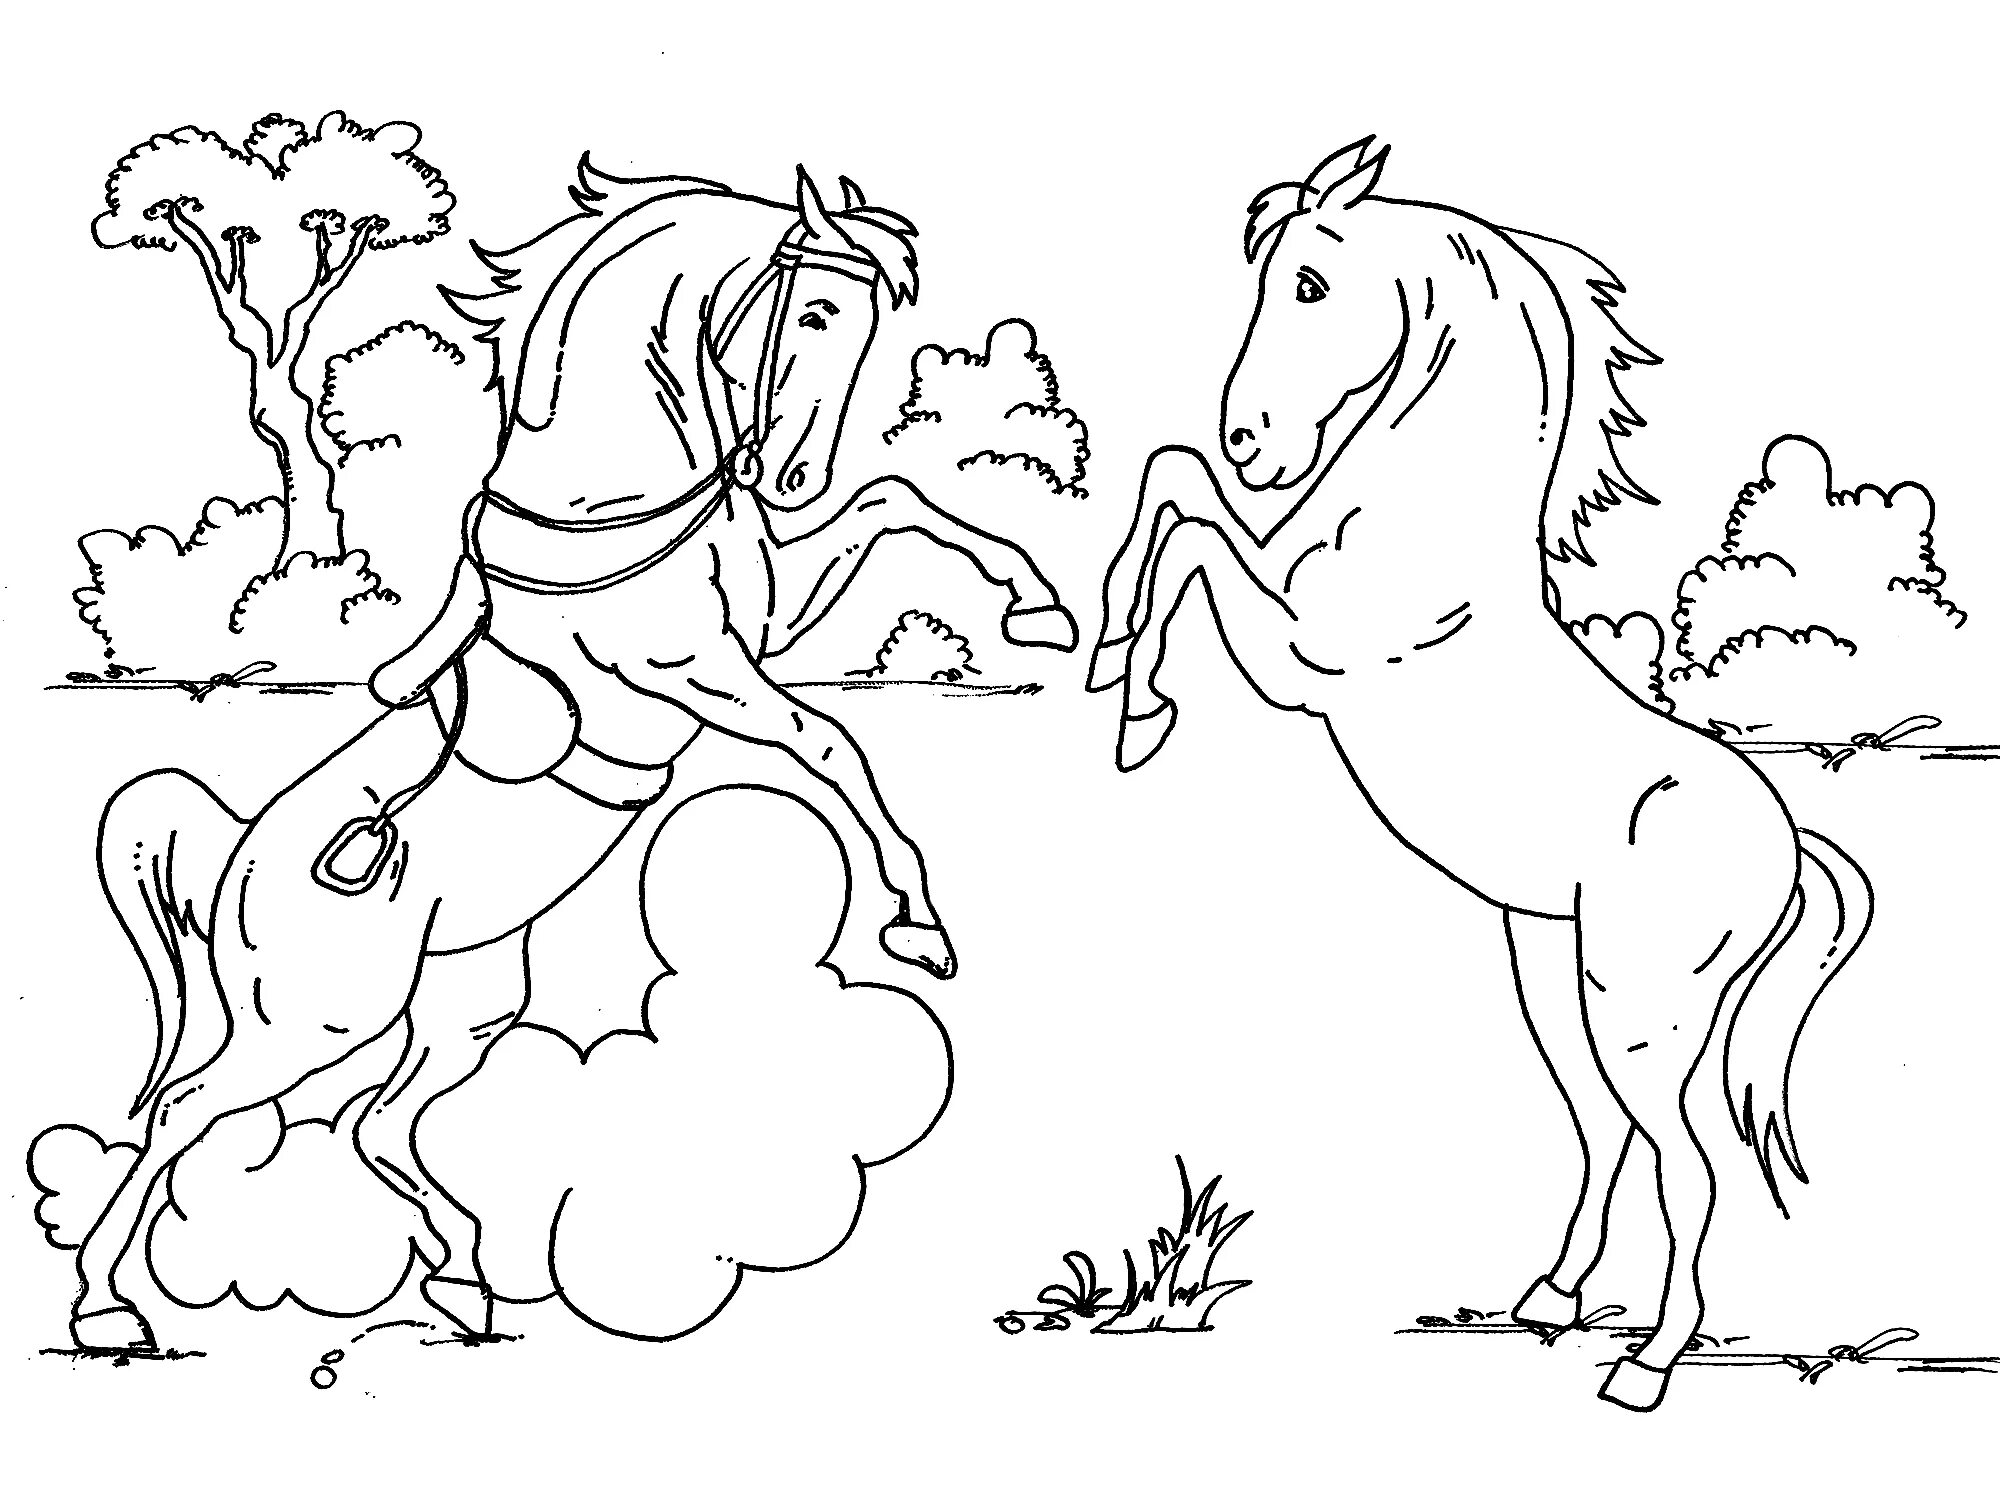 Coloring page joyful trio of horses